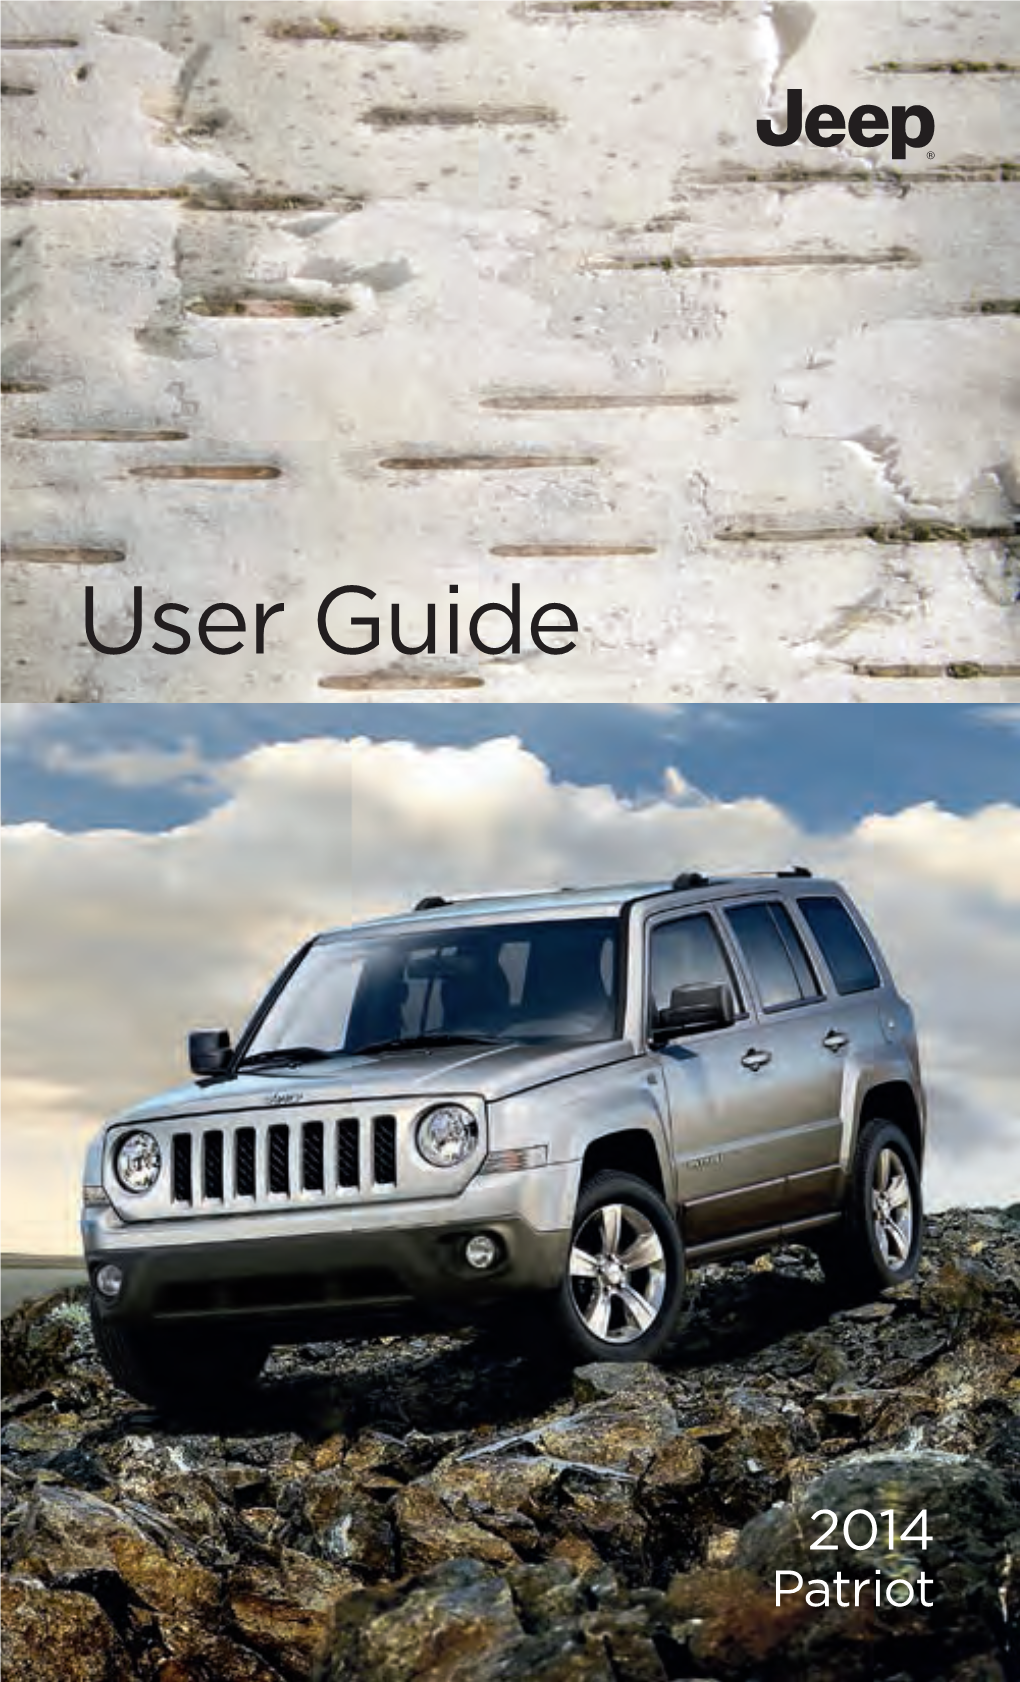 2014 Jeep Patriot User's Guide